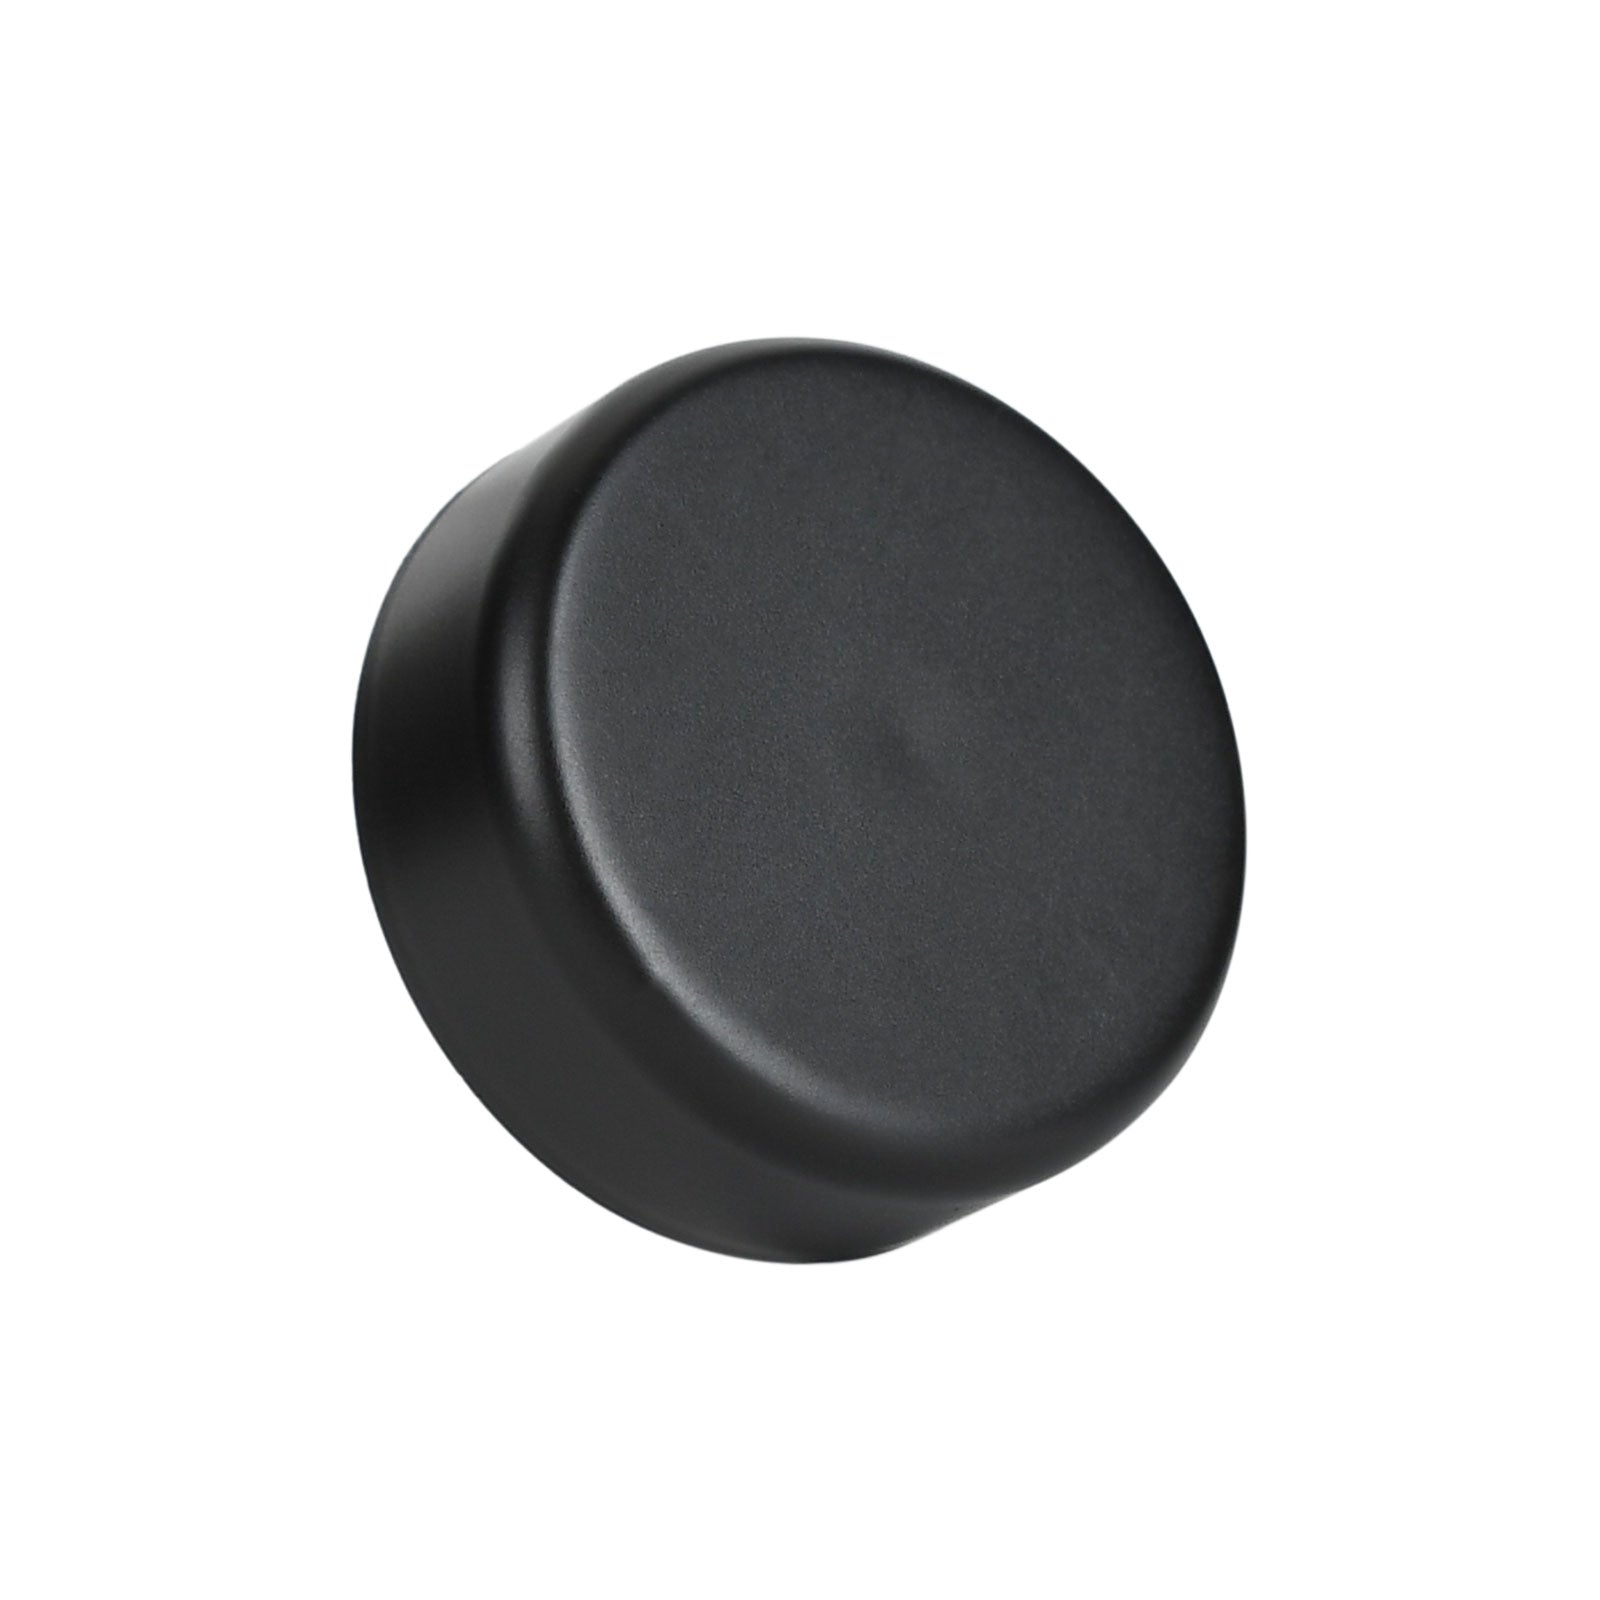 9ml Child Resistant Black Glass Jar With Black Cap - 2 Gram - 320 Count